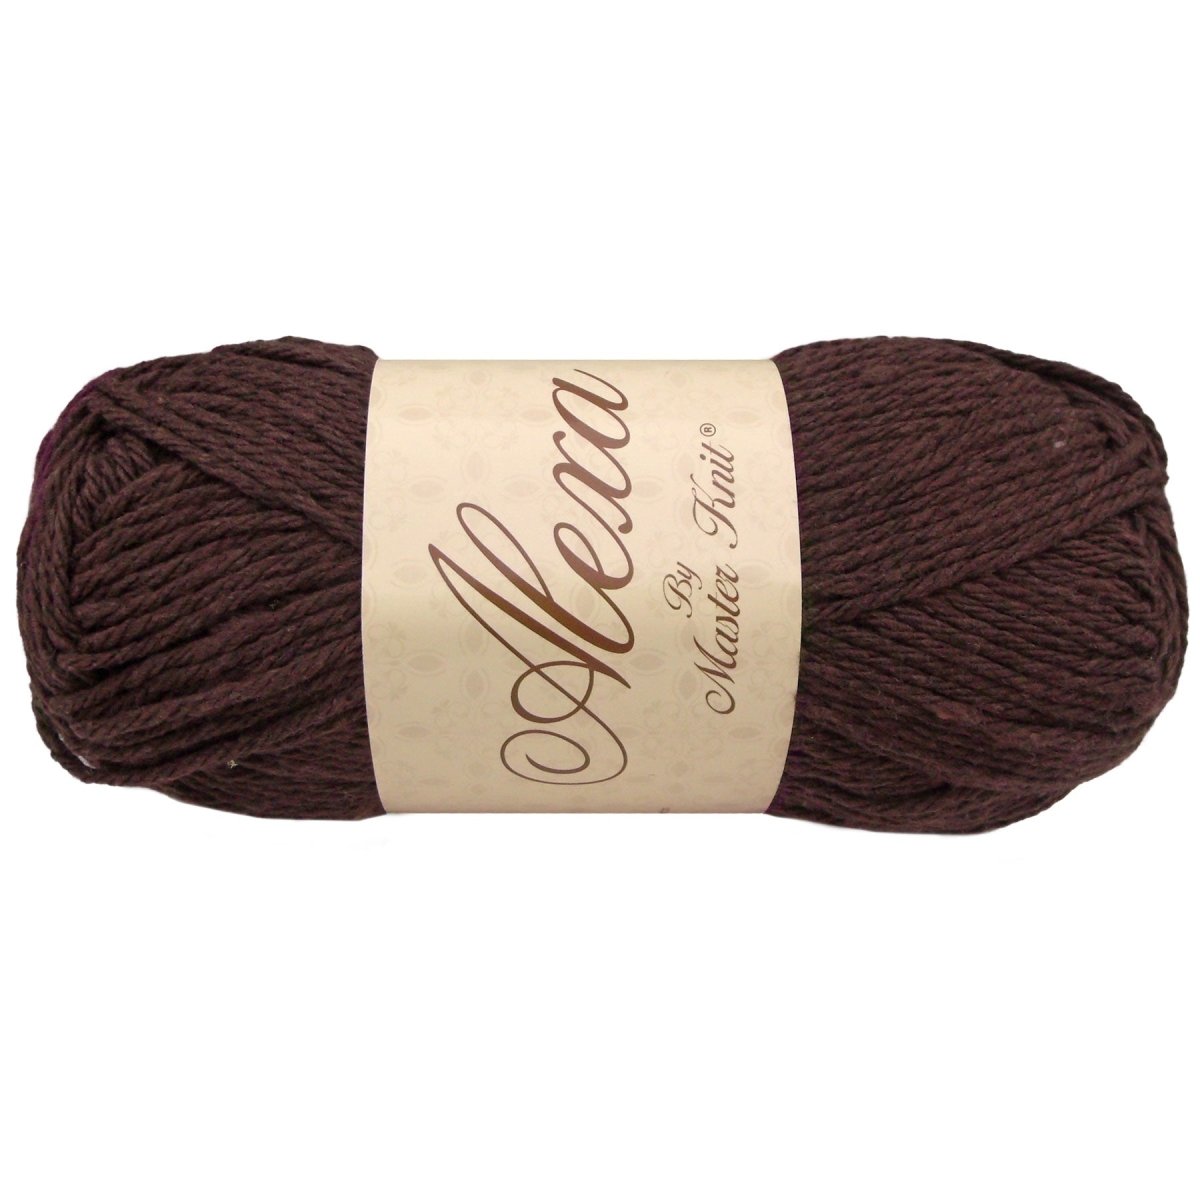 ALEXA - Crochetstores9340-890